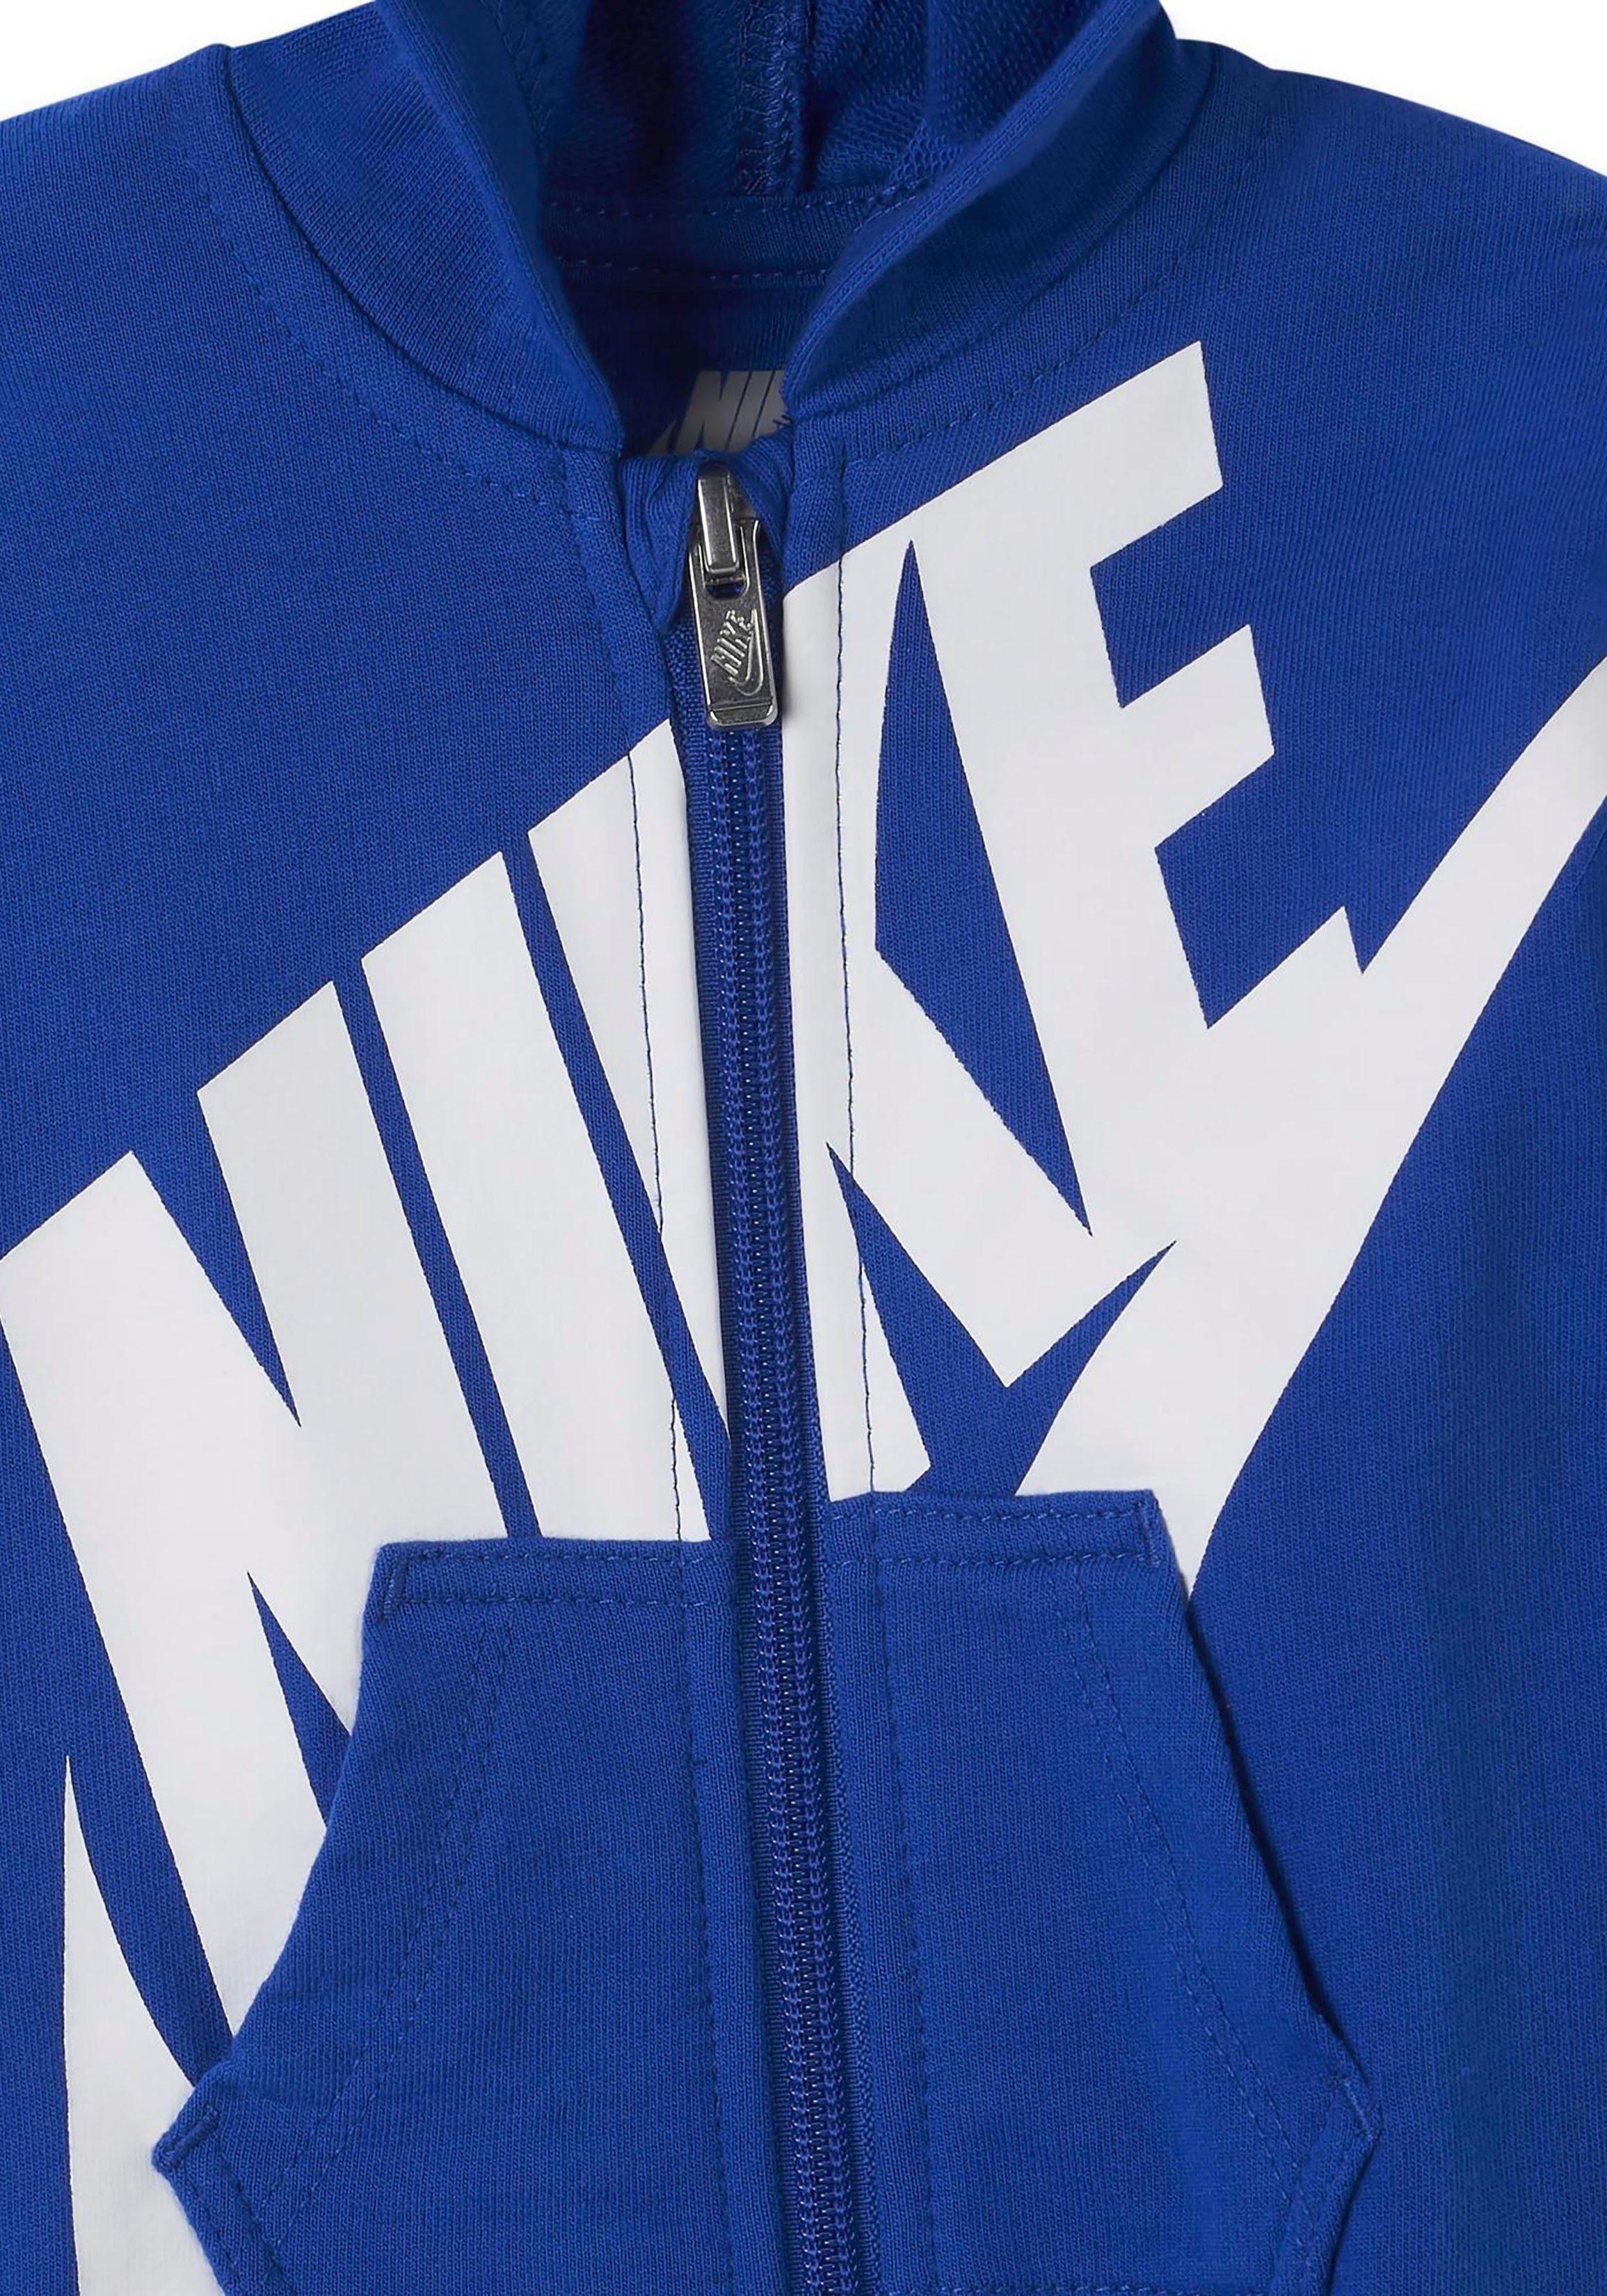 Nike Sportswear NKN COVERALL PLAY DAY Strampler ALL blau-weiß